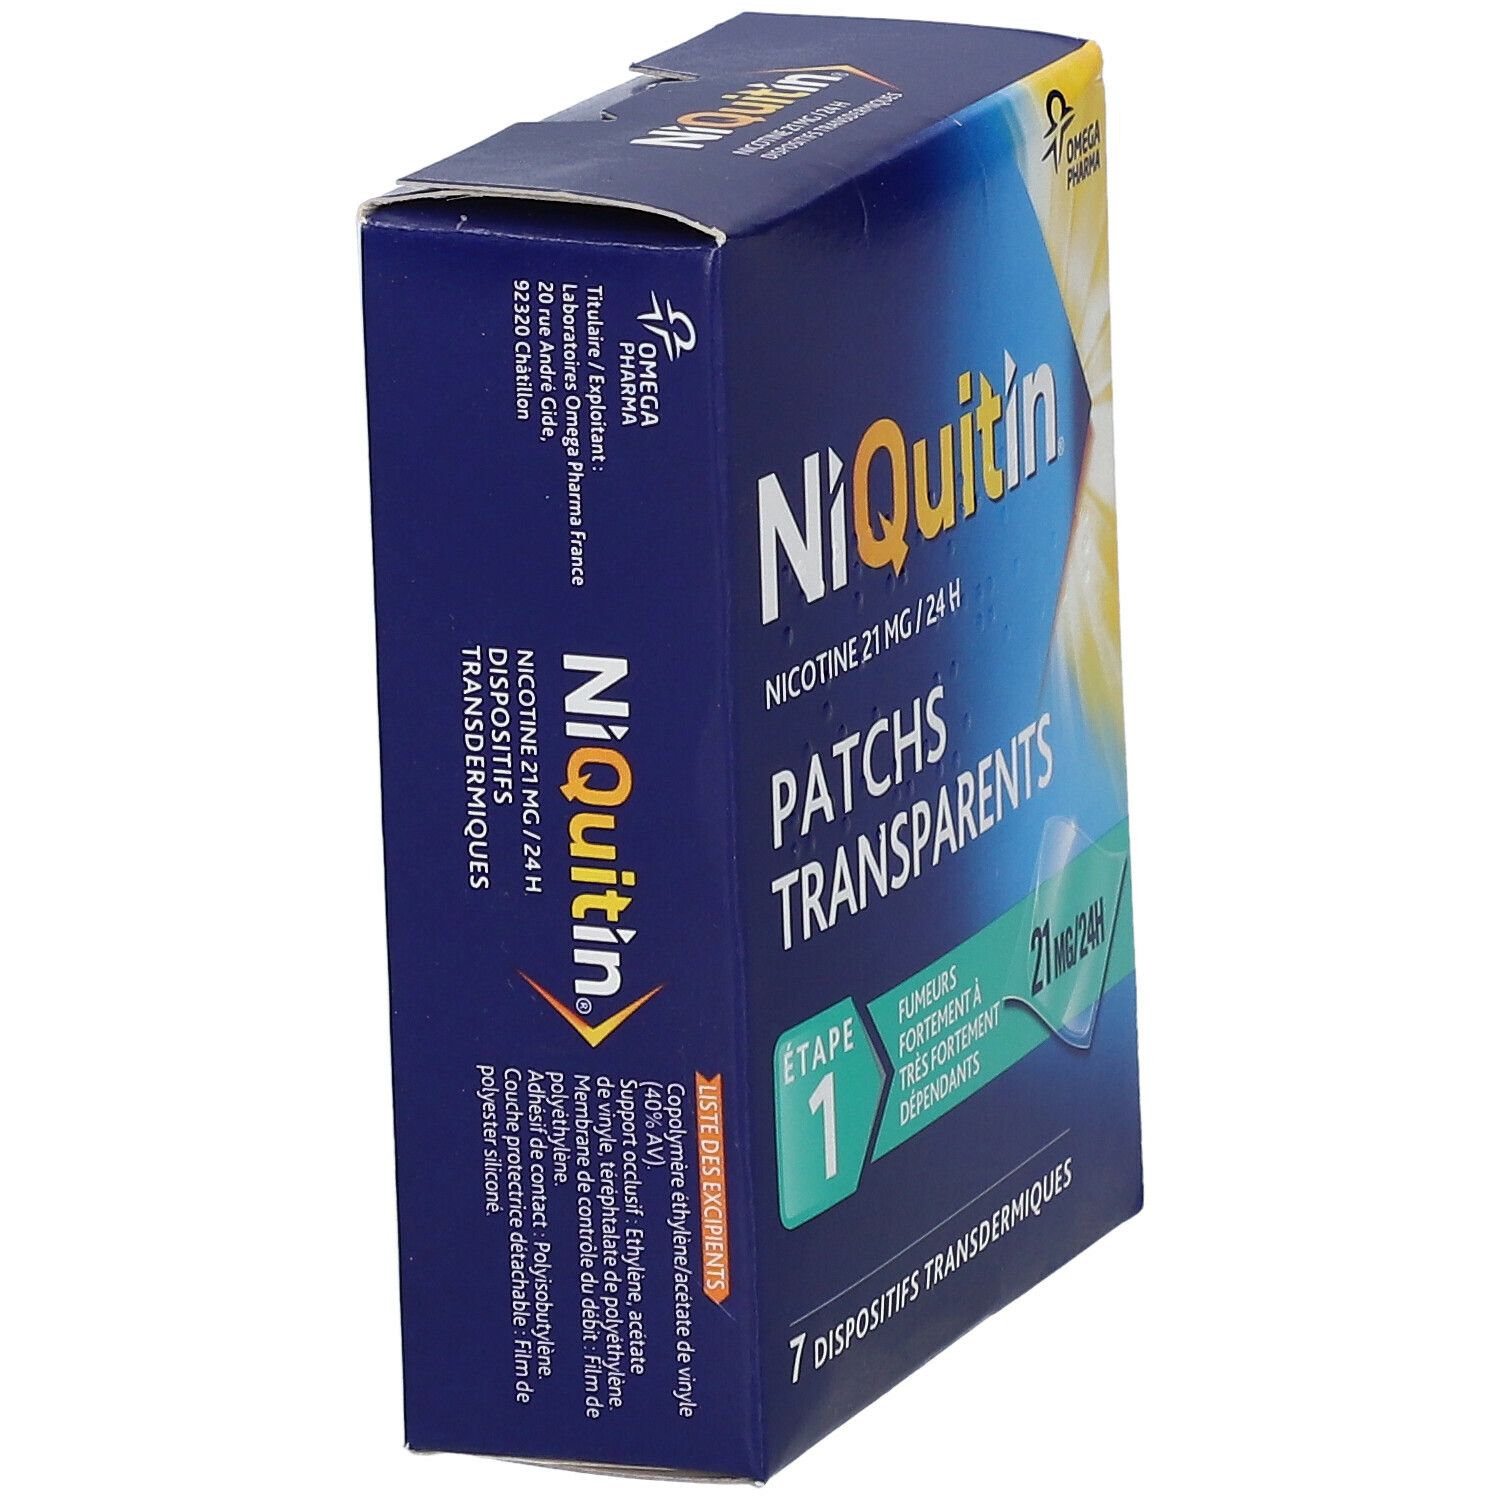 NiQuitin® Nicotine 21 mg/24 H